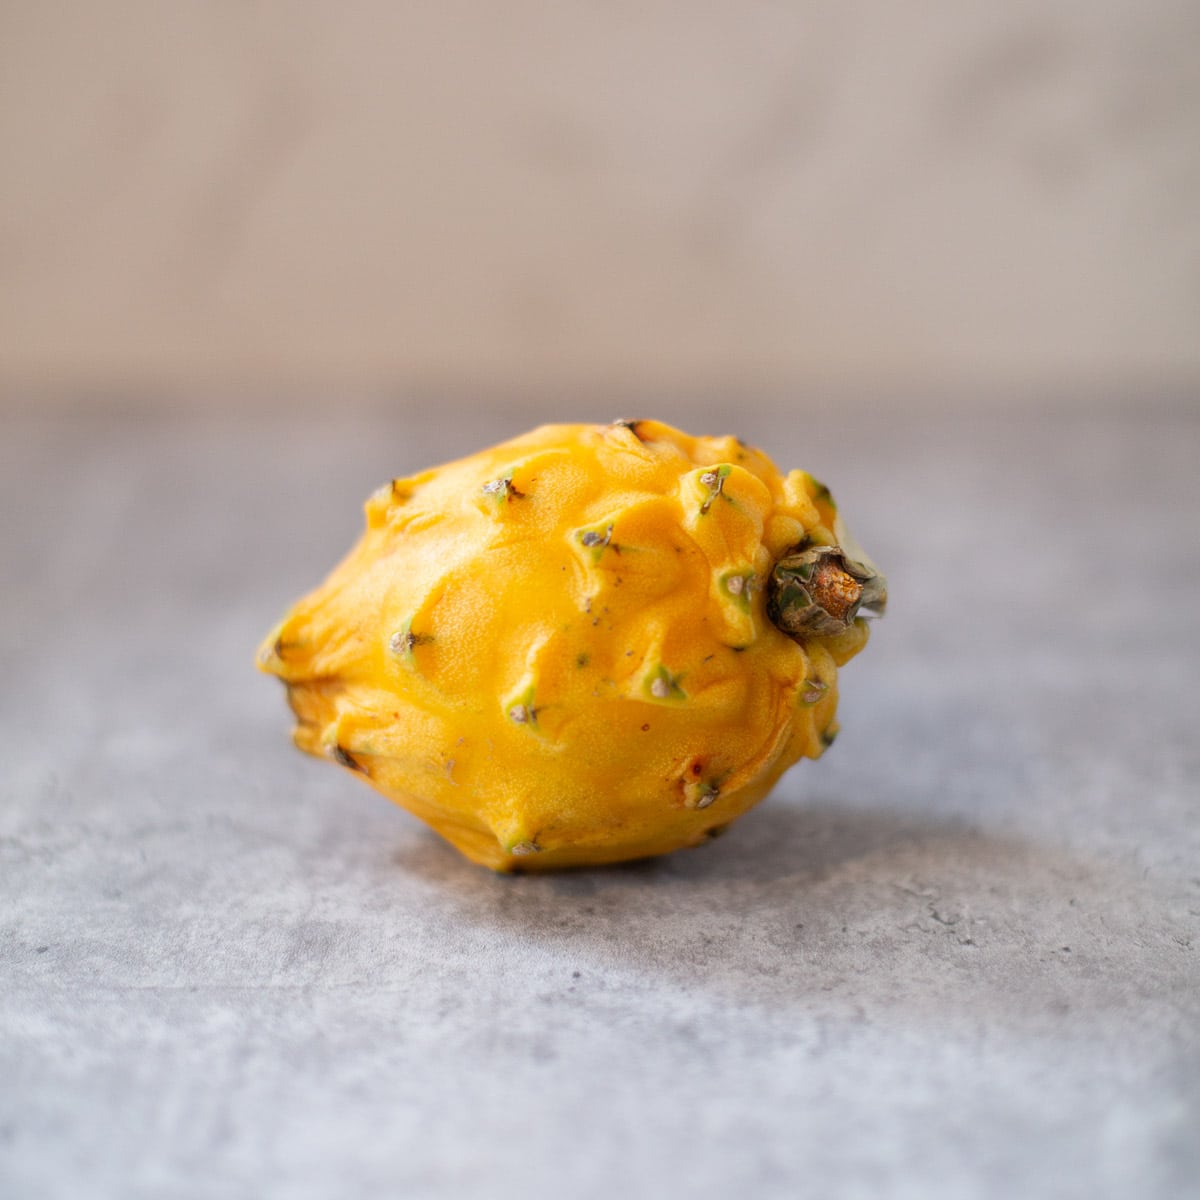 exterior or yellow dragon fruit